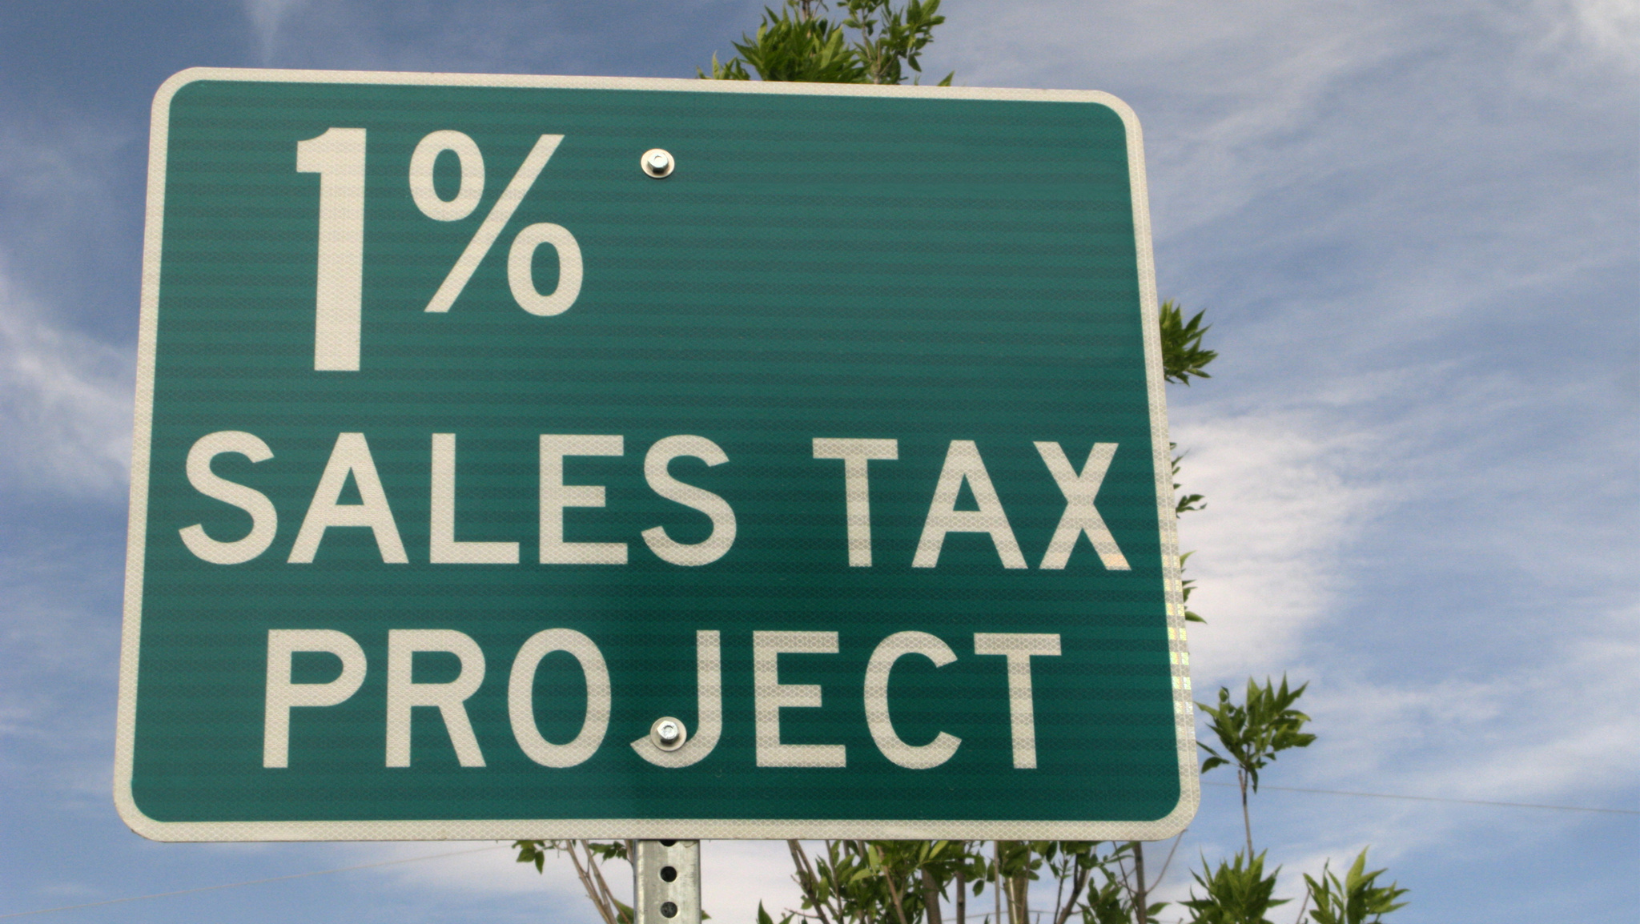 Benefits of New York’s sales tax